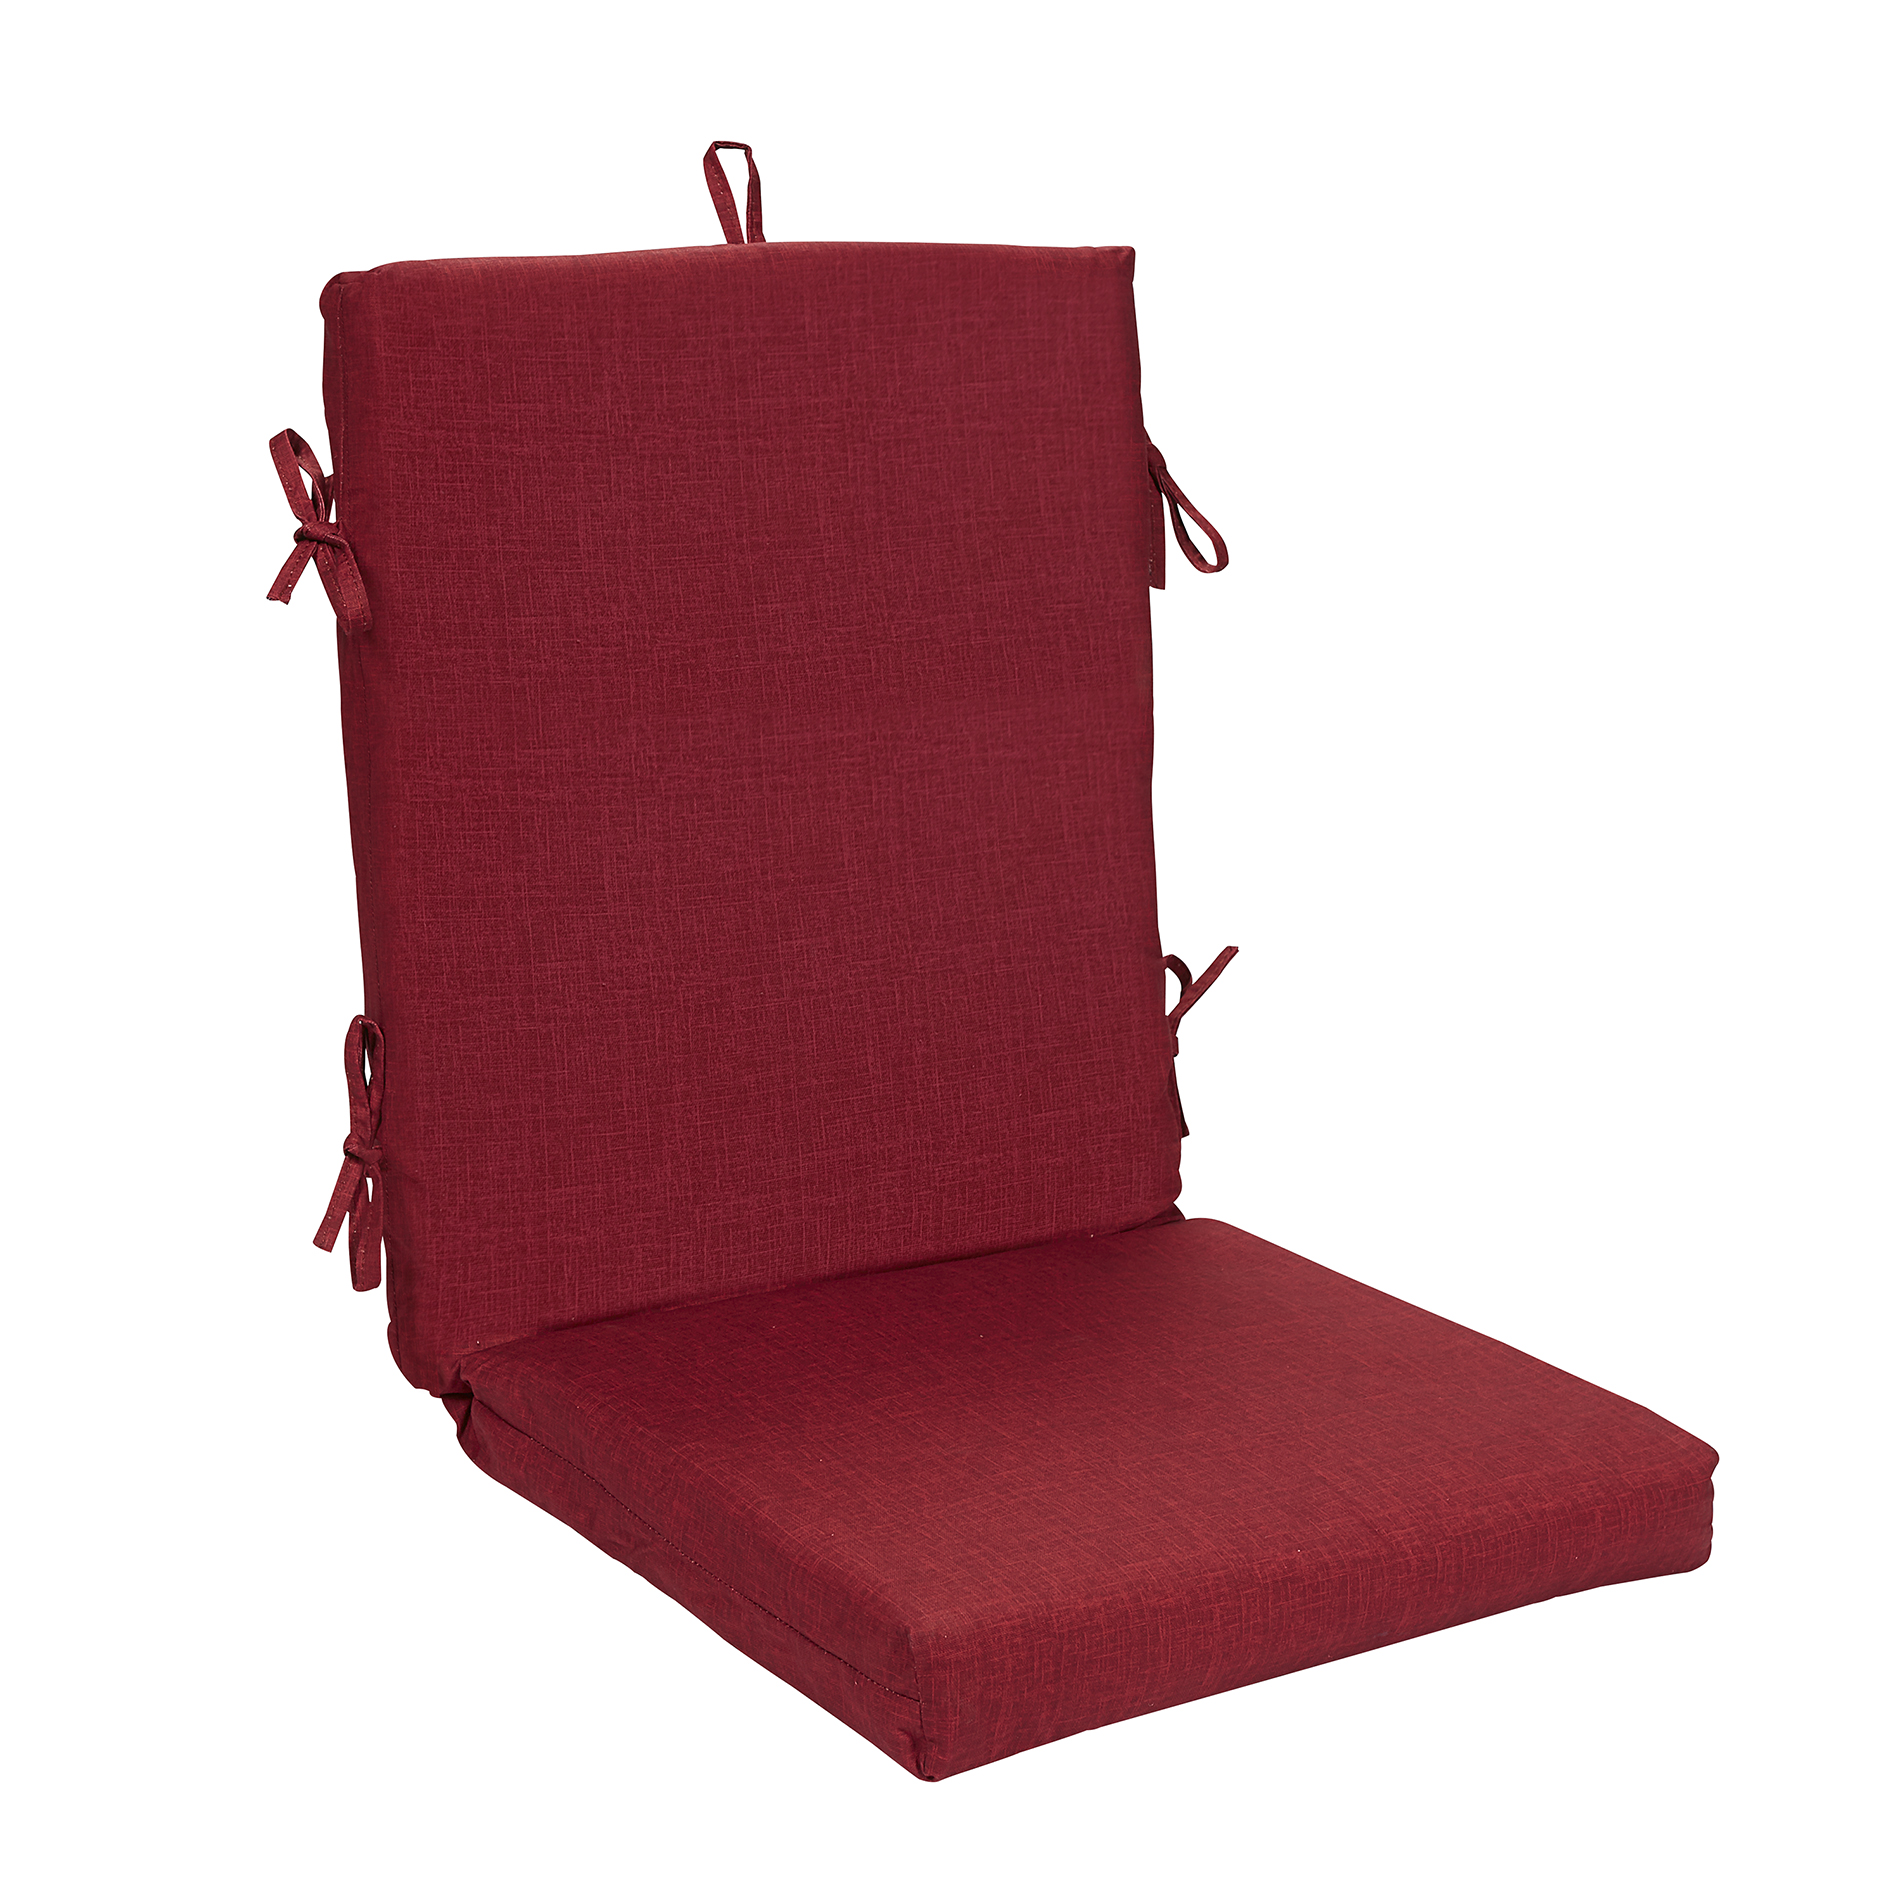 Sutton Rowe Outdoor Chair Cushion - Red